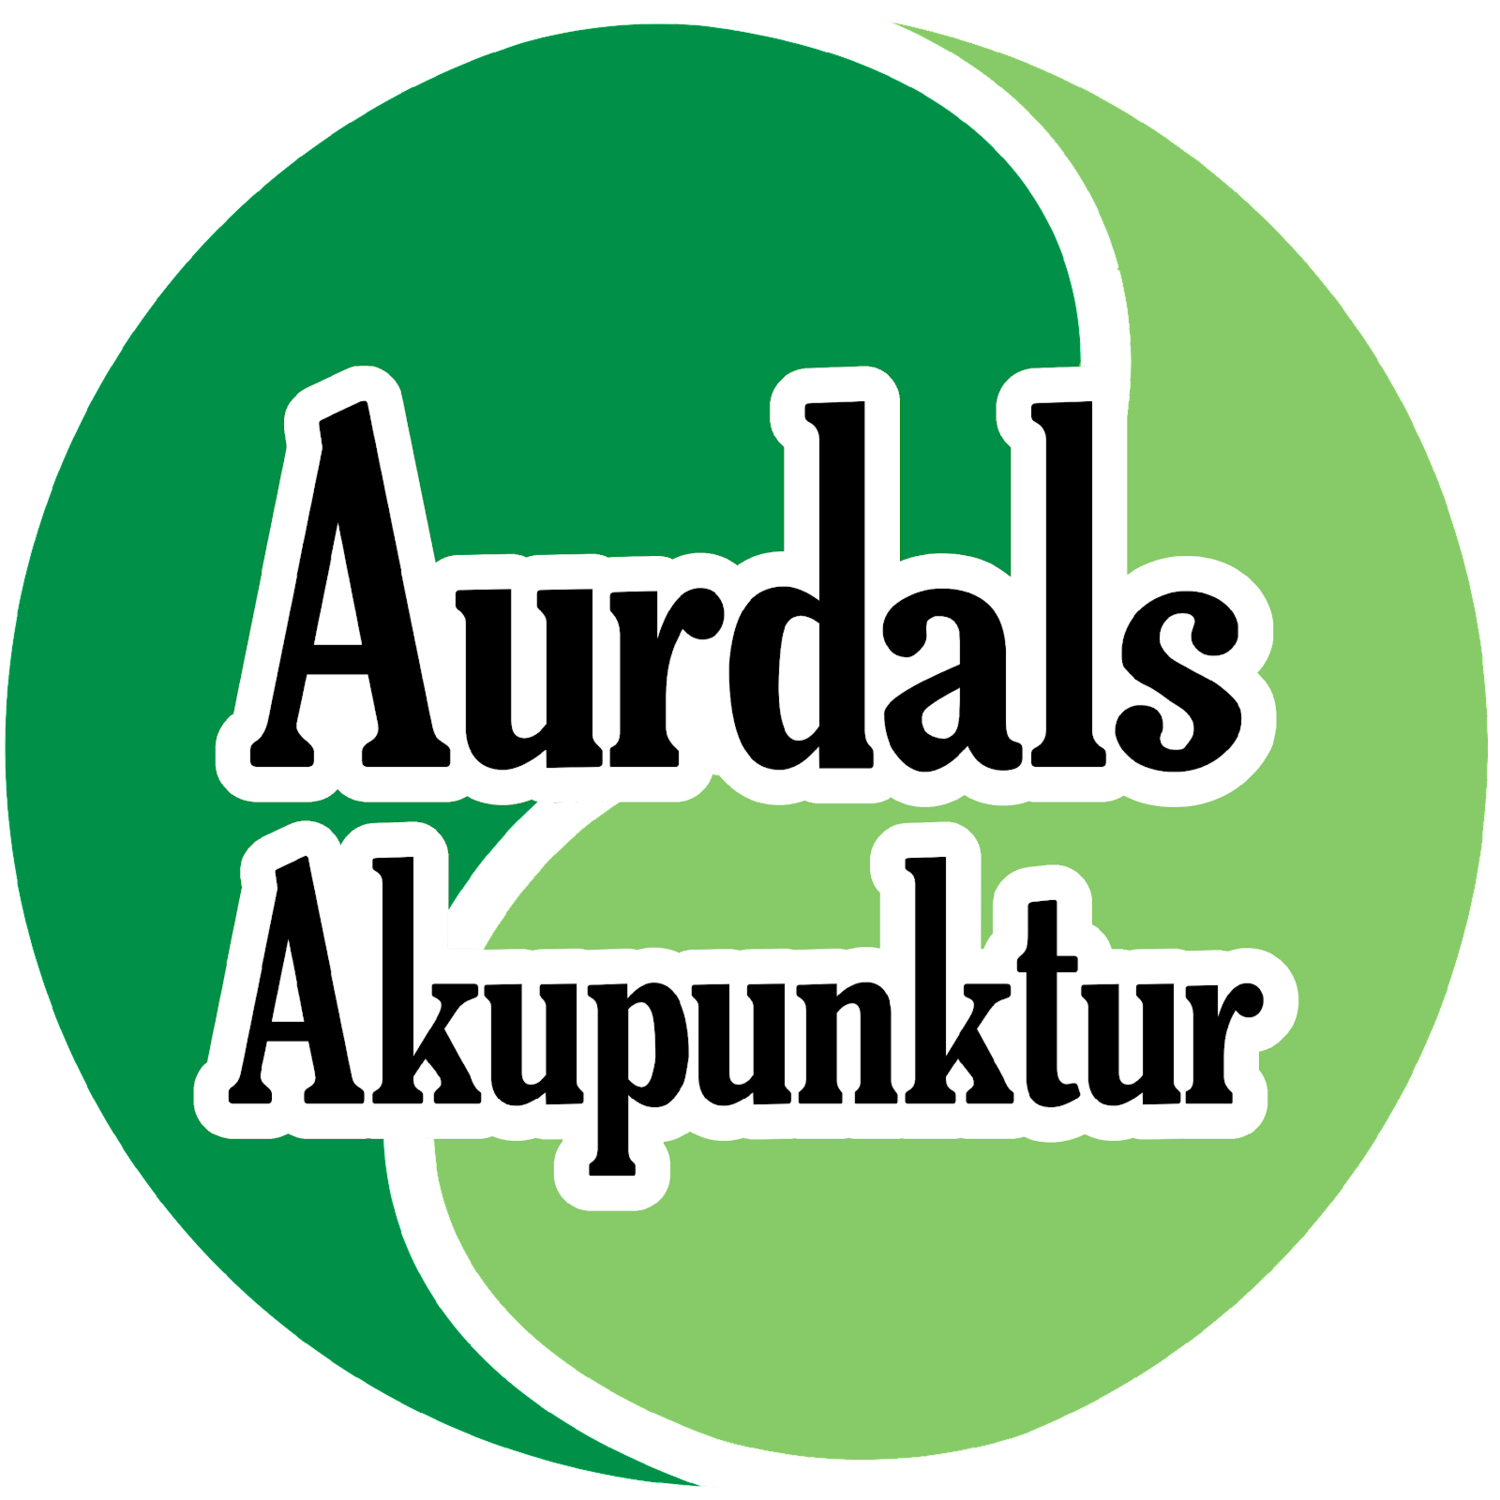 Aurdals Akupunktur